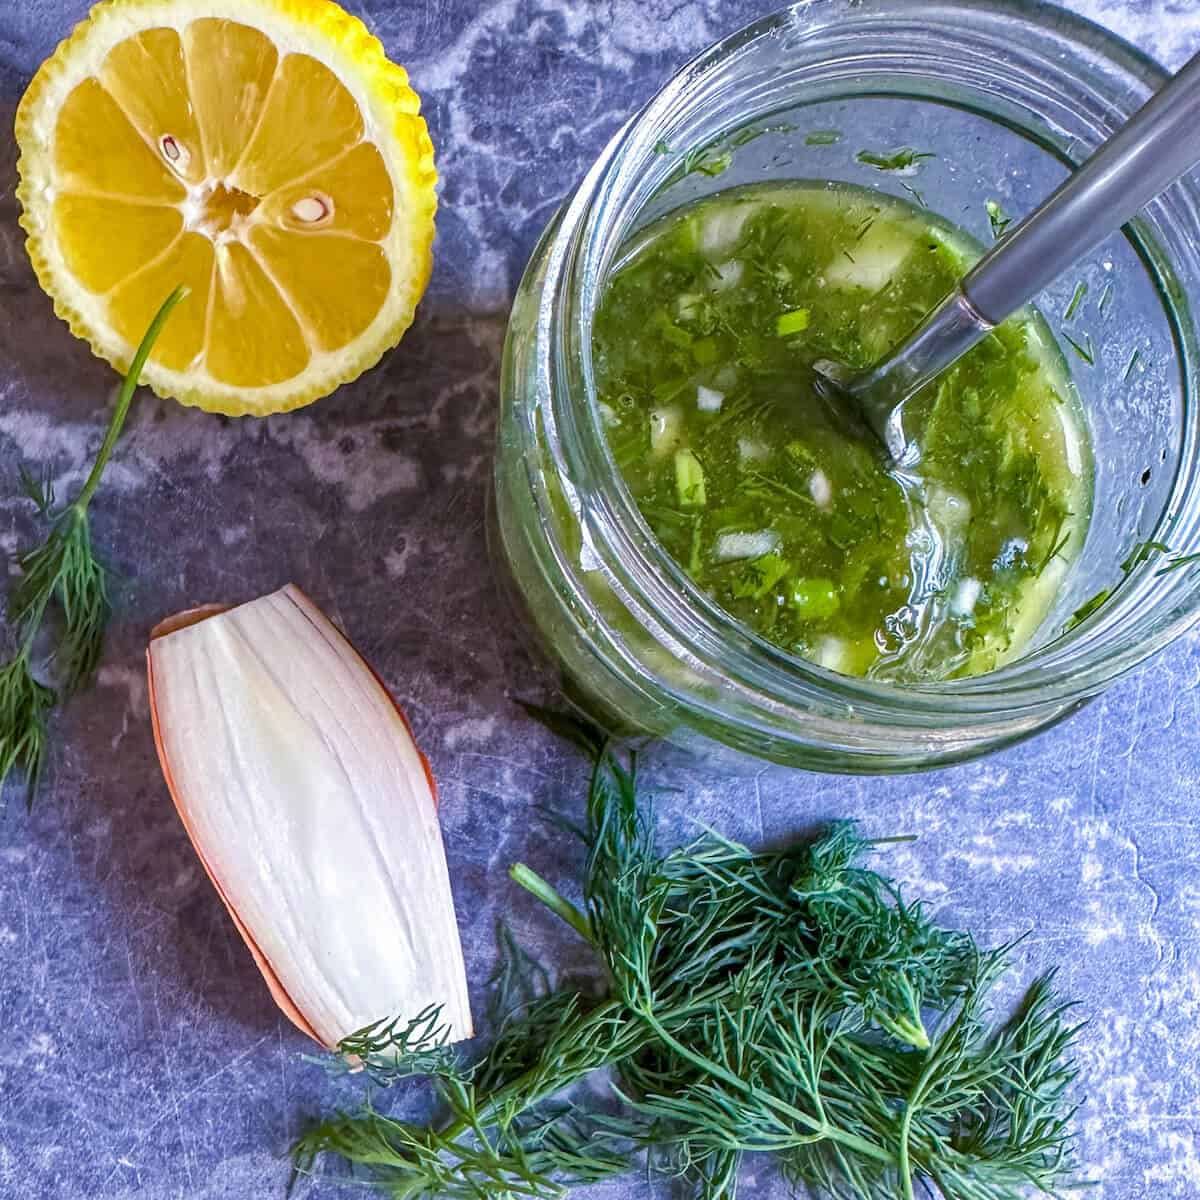 Lemon Herb Vinaigrette Dressing in a jar next to a lemon, shallot and some fresh herbs.